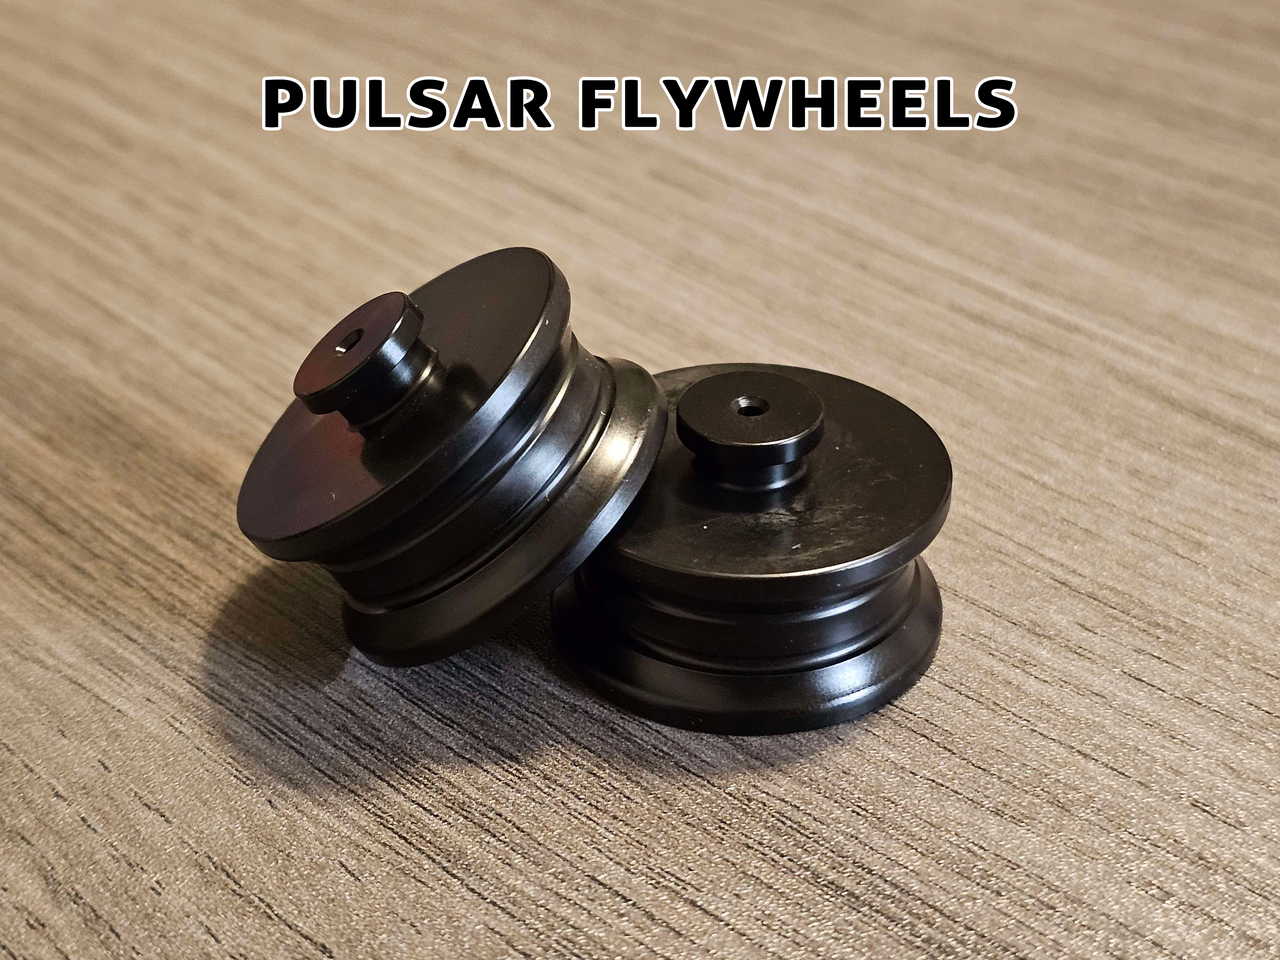 Pulsar Flywheels